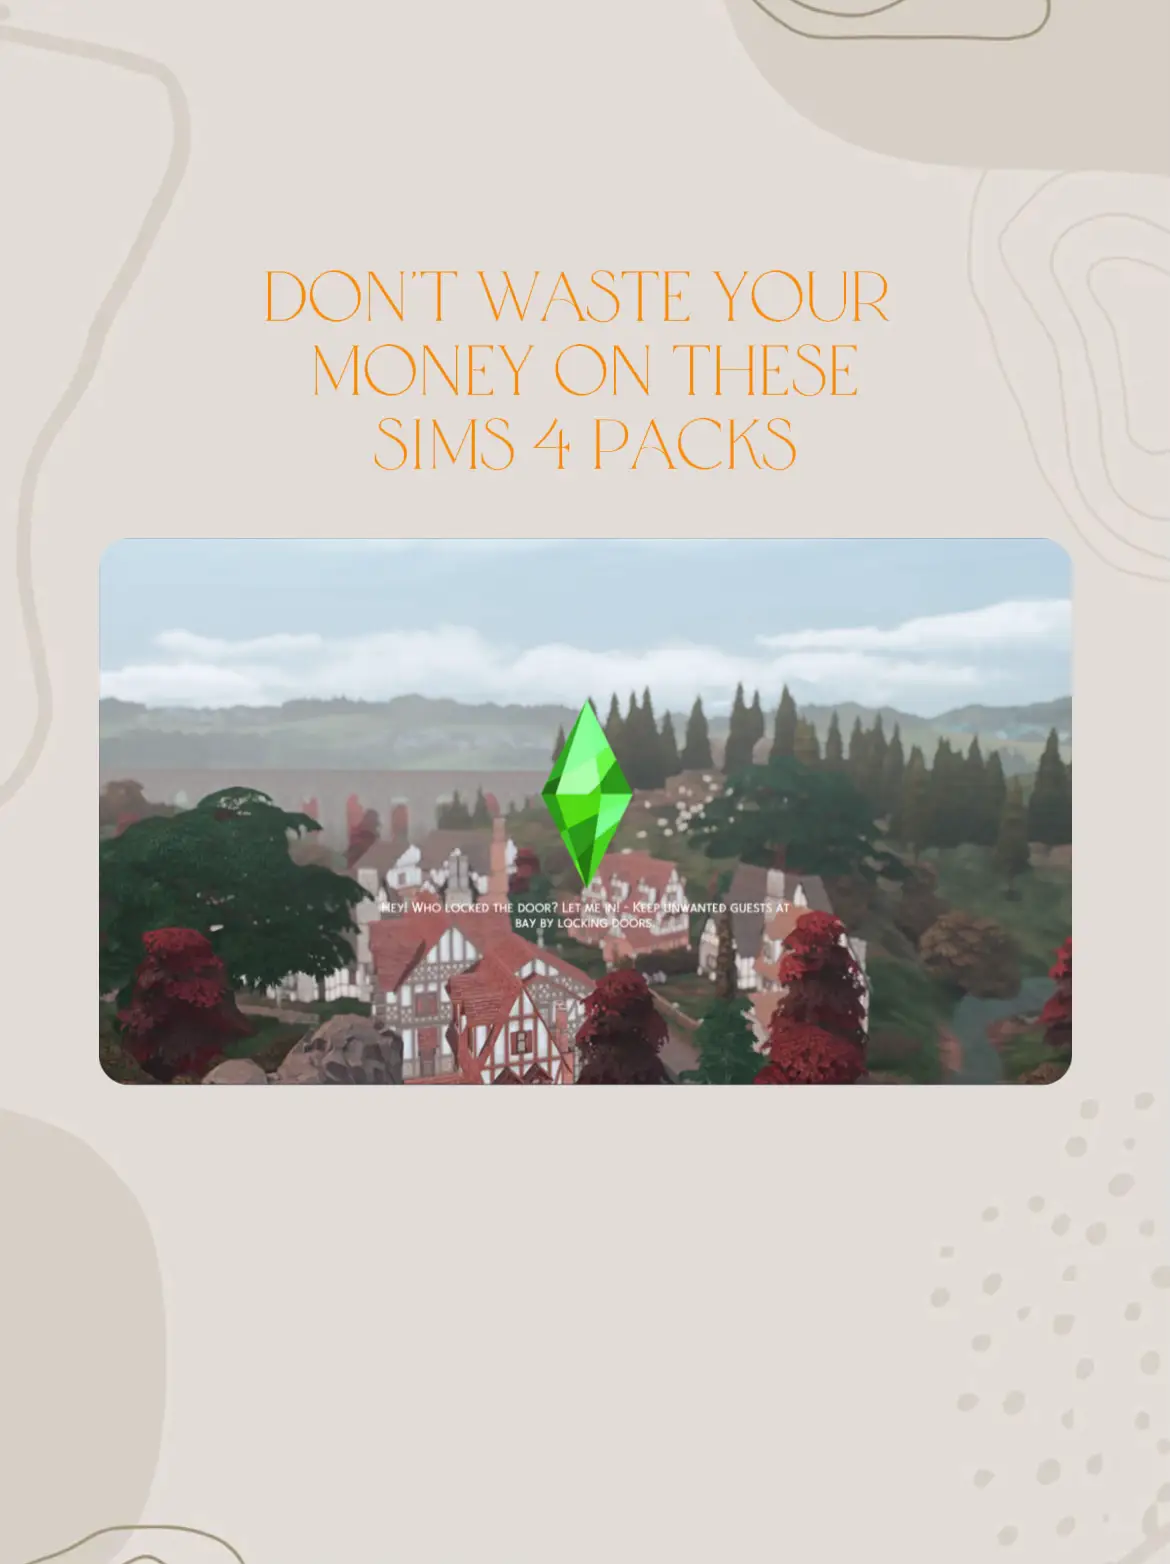 Sims 4 clutter - Lemon8 Search